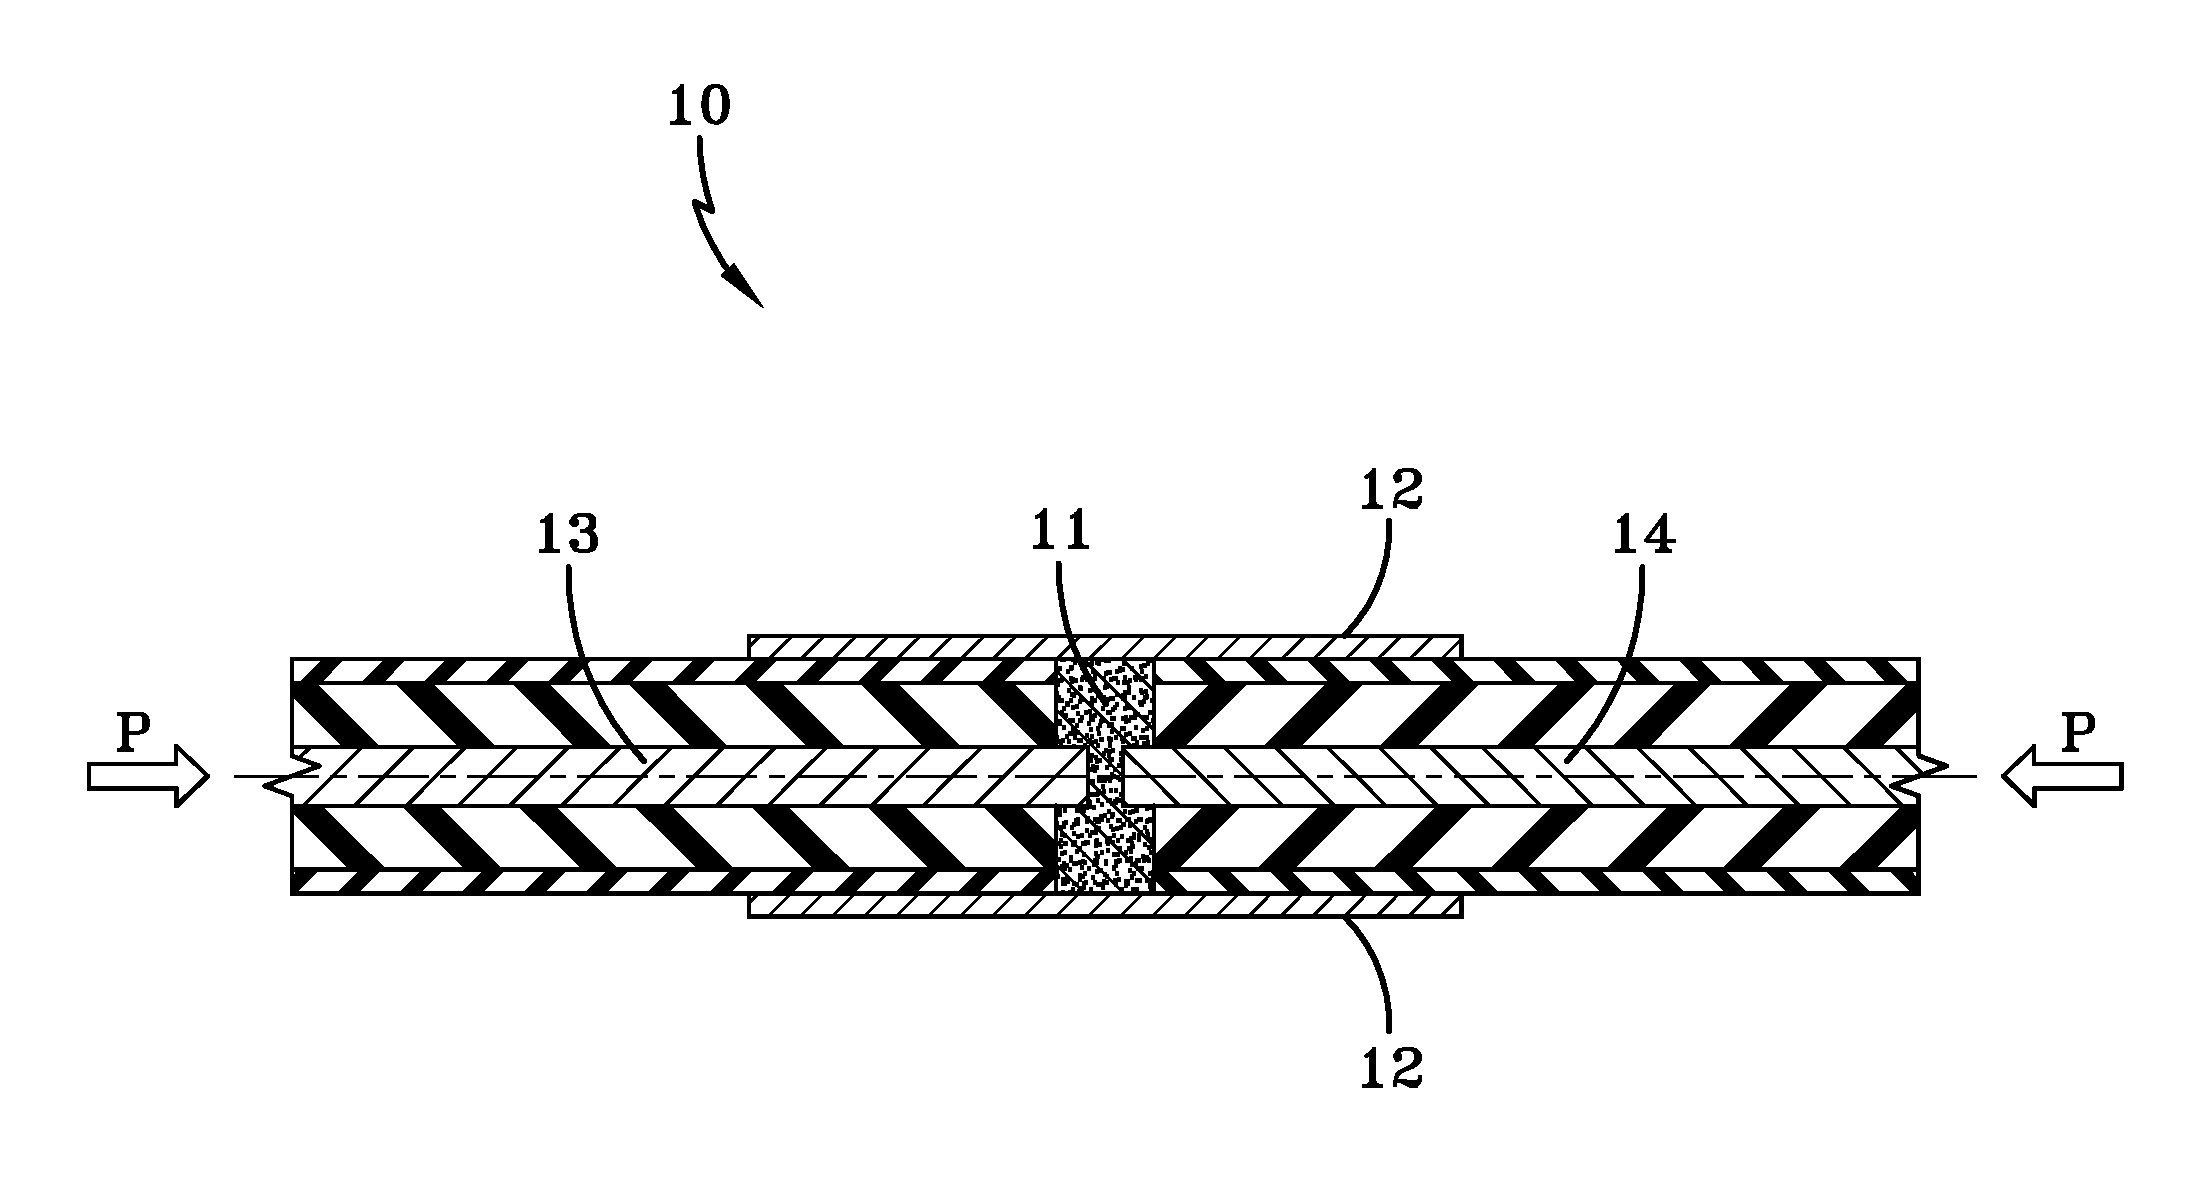 Conveyor belt with zero stage splice